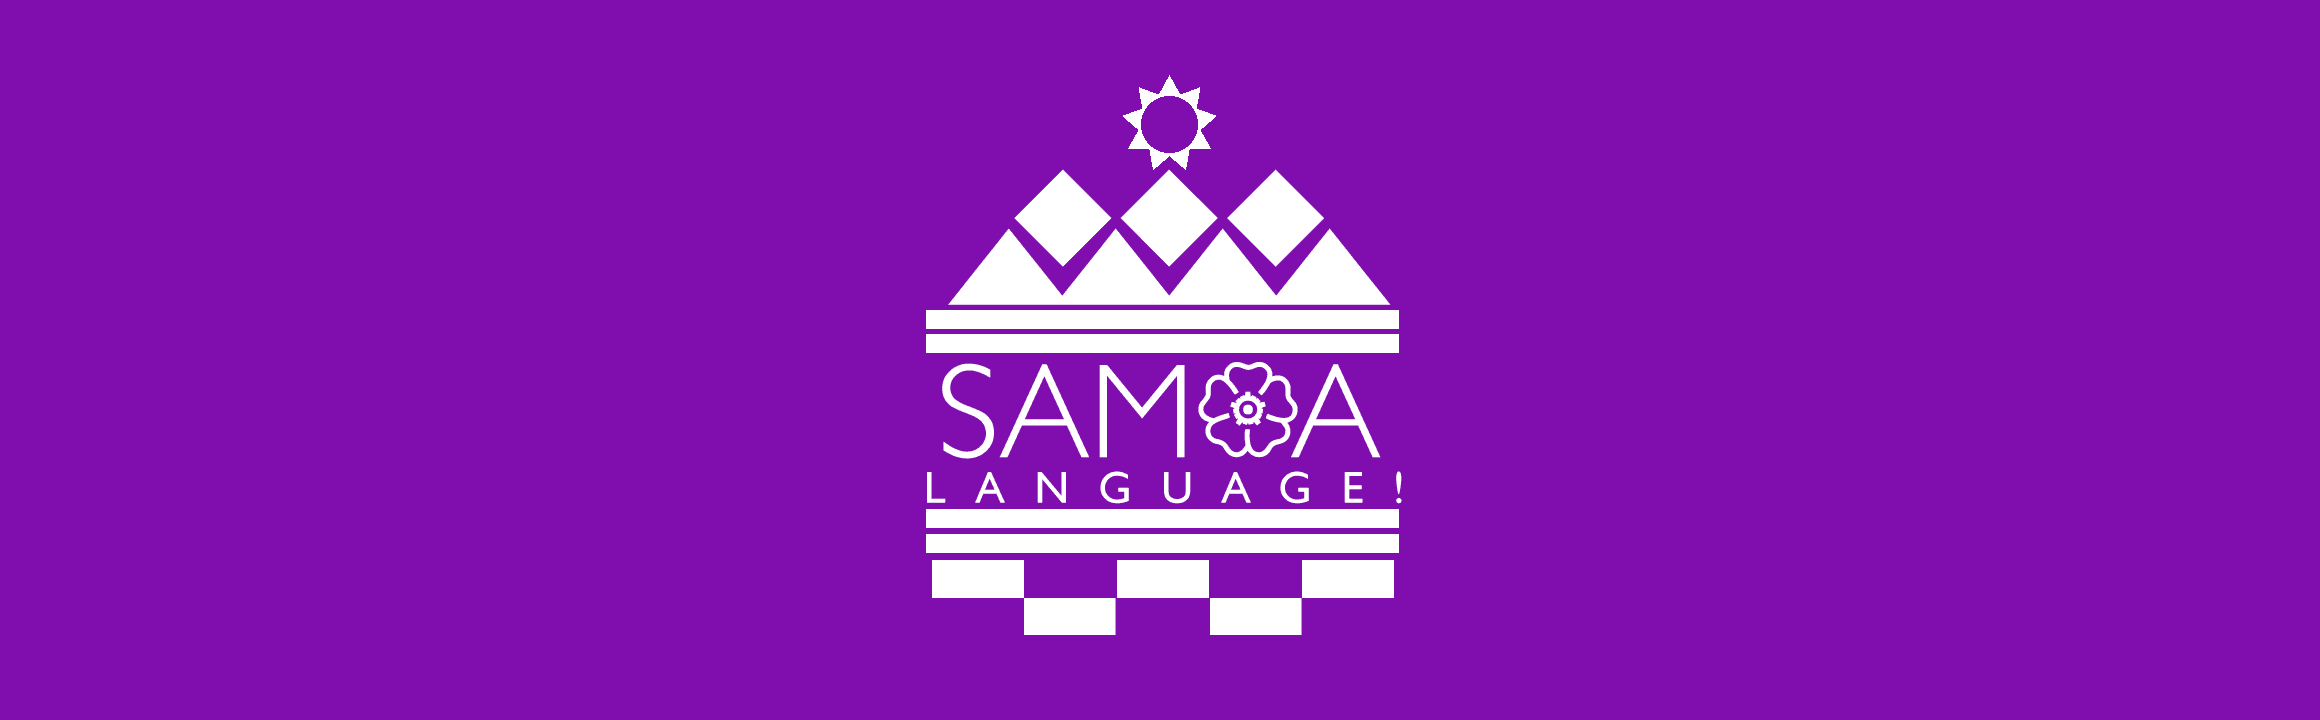 Samoa Language! Collection